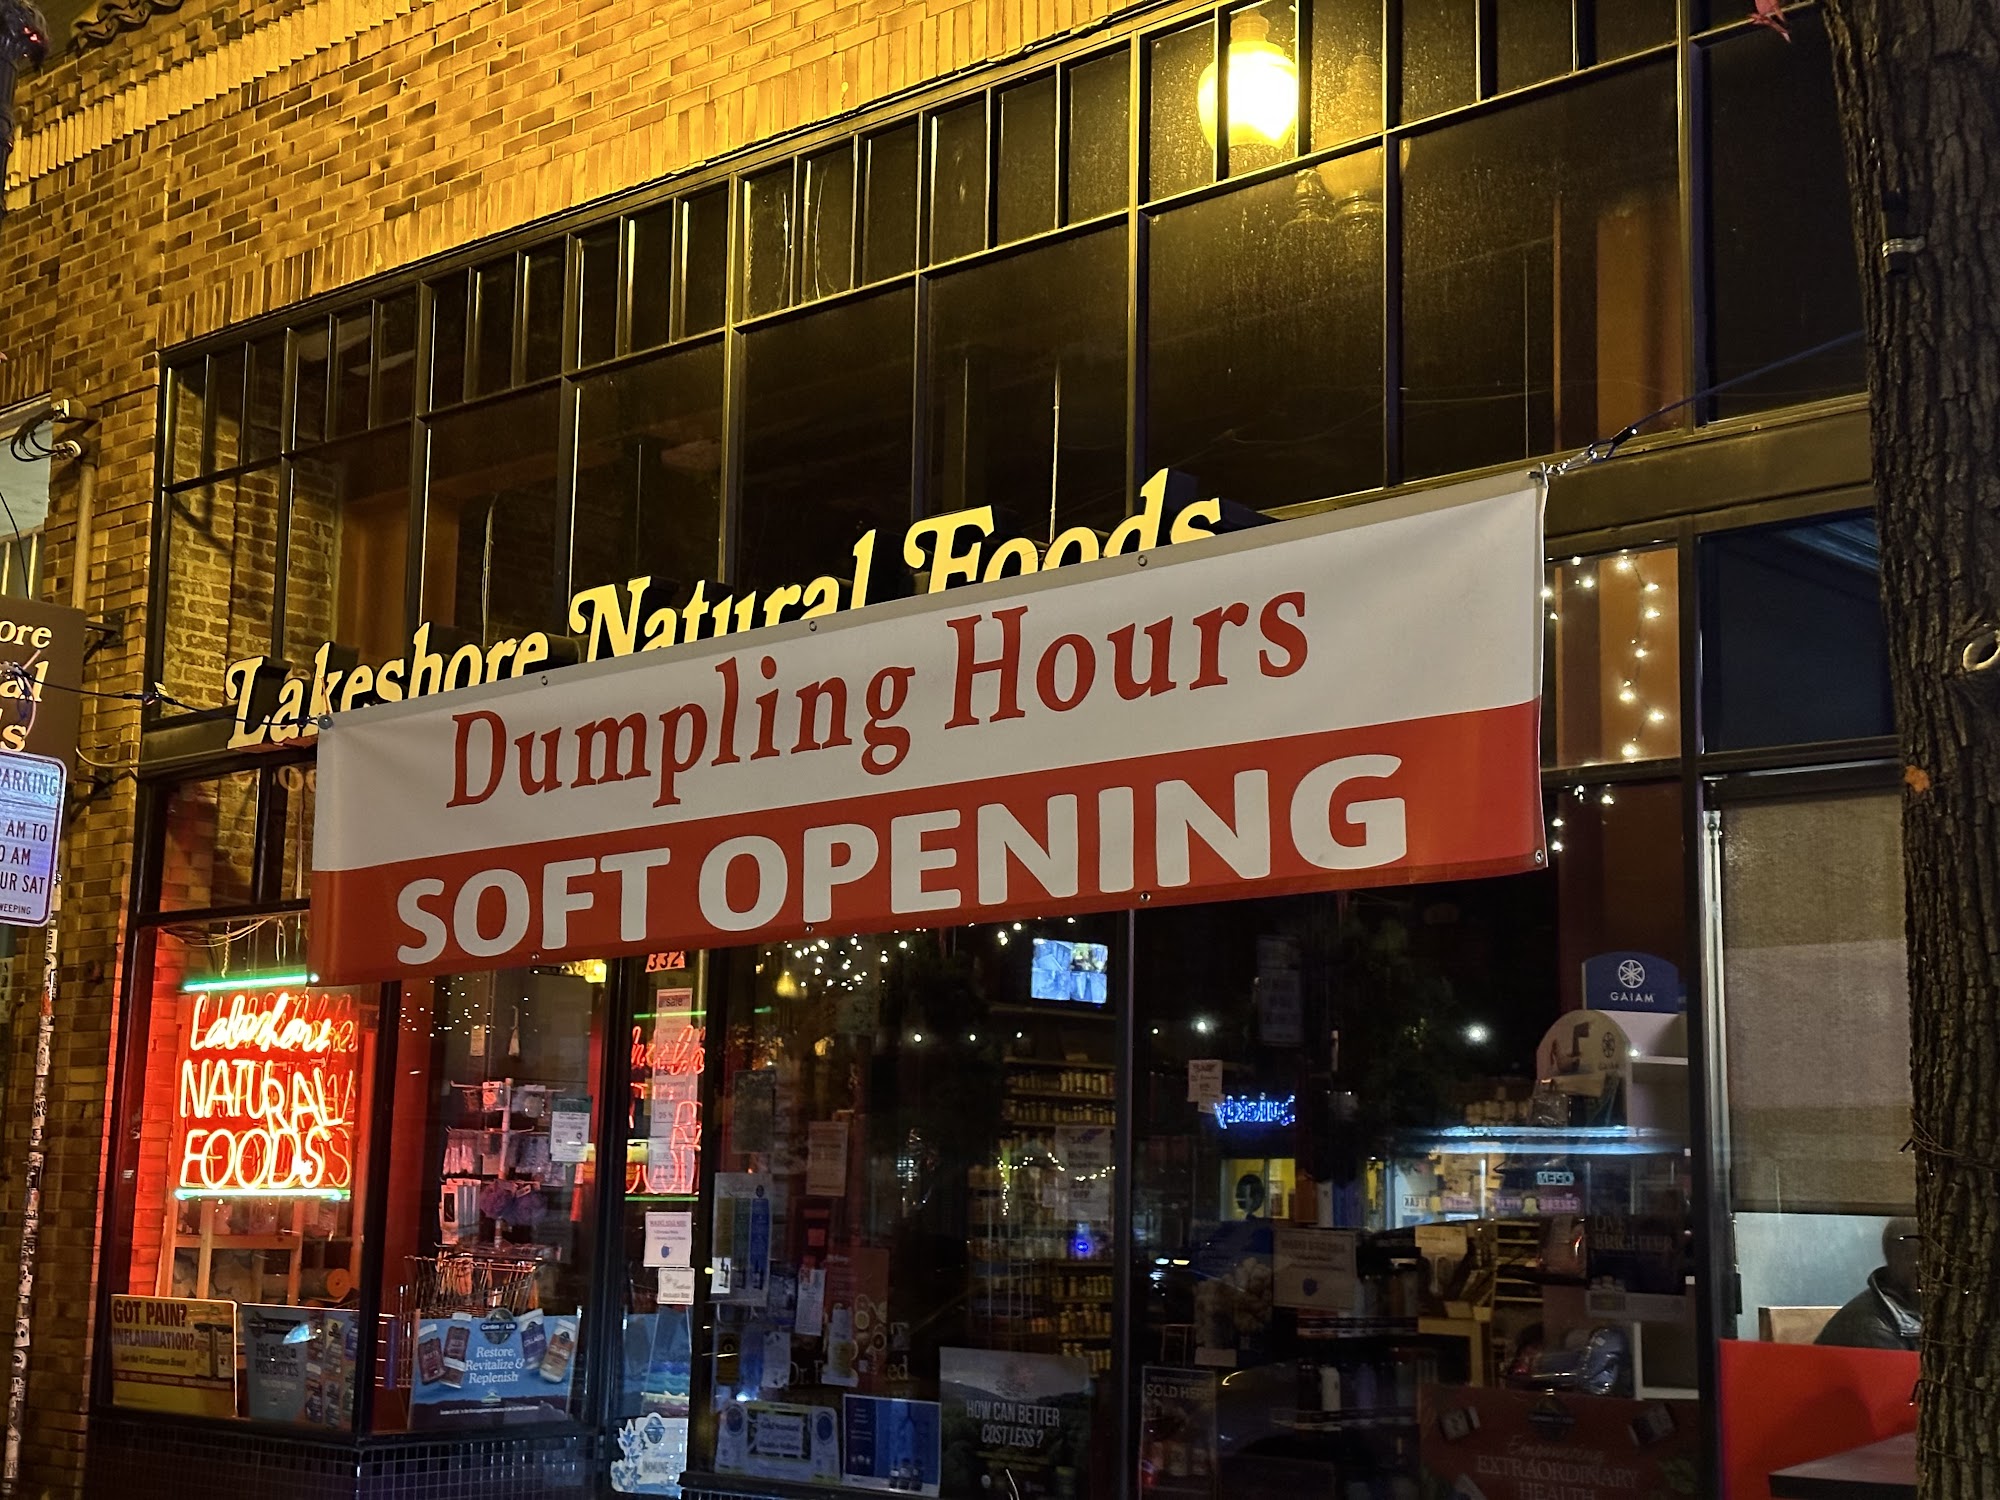 Dumpling Hours - Oakland